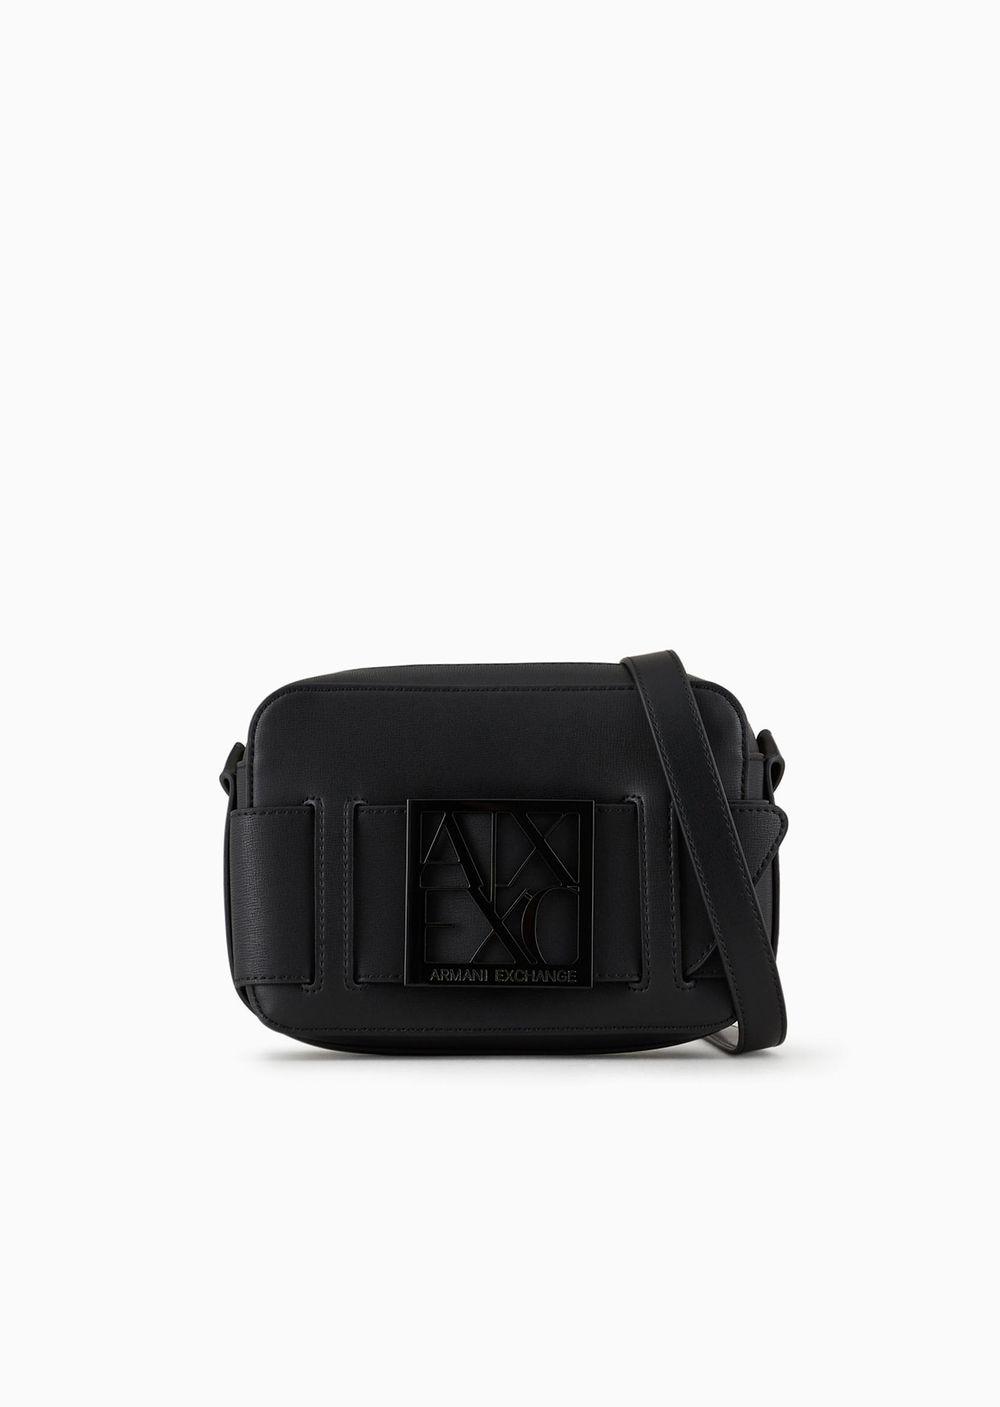 Armani Exchange Camera Case With Adjustable Shoulder Strap in Black | Lyst